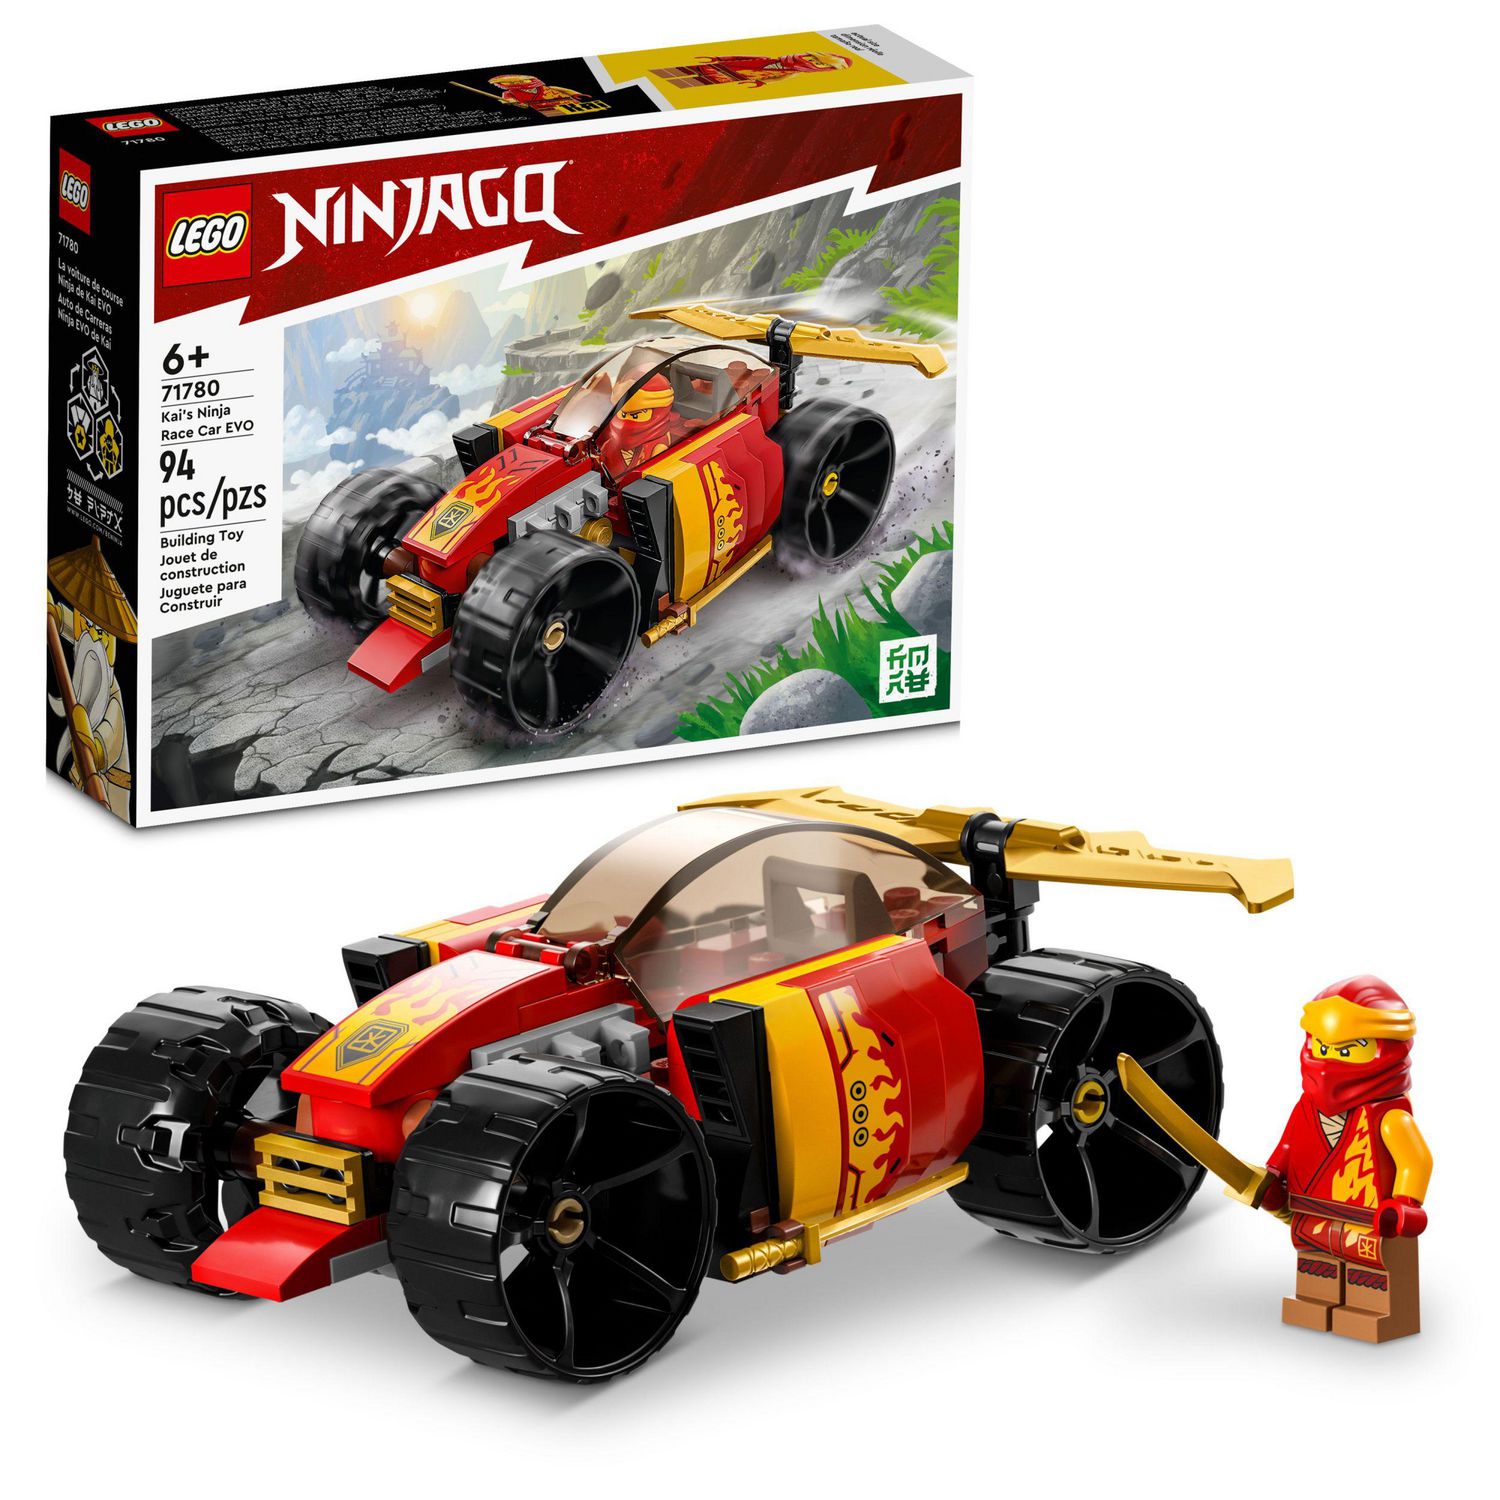 LEGO NINJAGO Kai's Ninja Race Car EVO, 2 in 1 Race Car Building Toy Set,  Kids Can Build an Off Road Vehicle or Race Car, Ninja Minifigure with Toy  Swords, Gift for